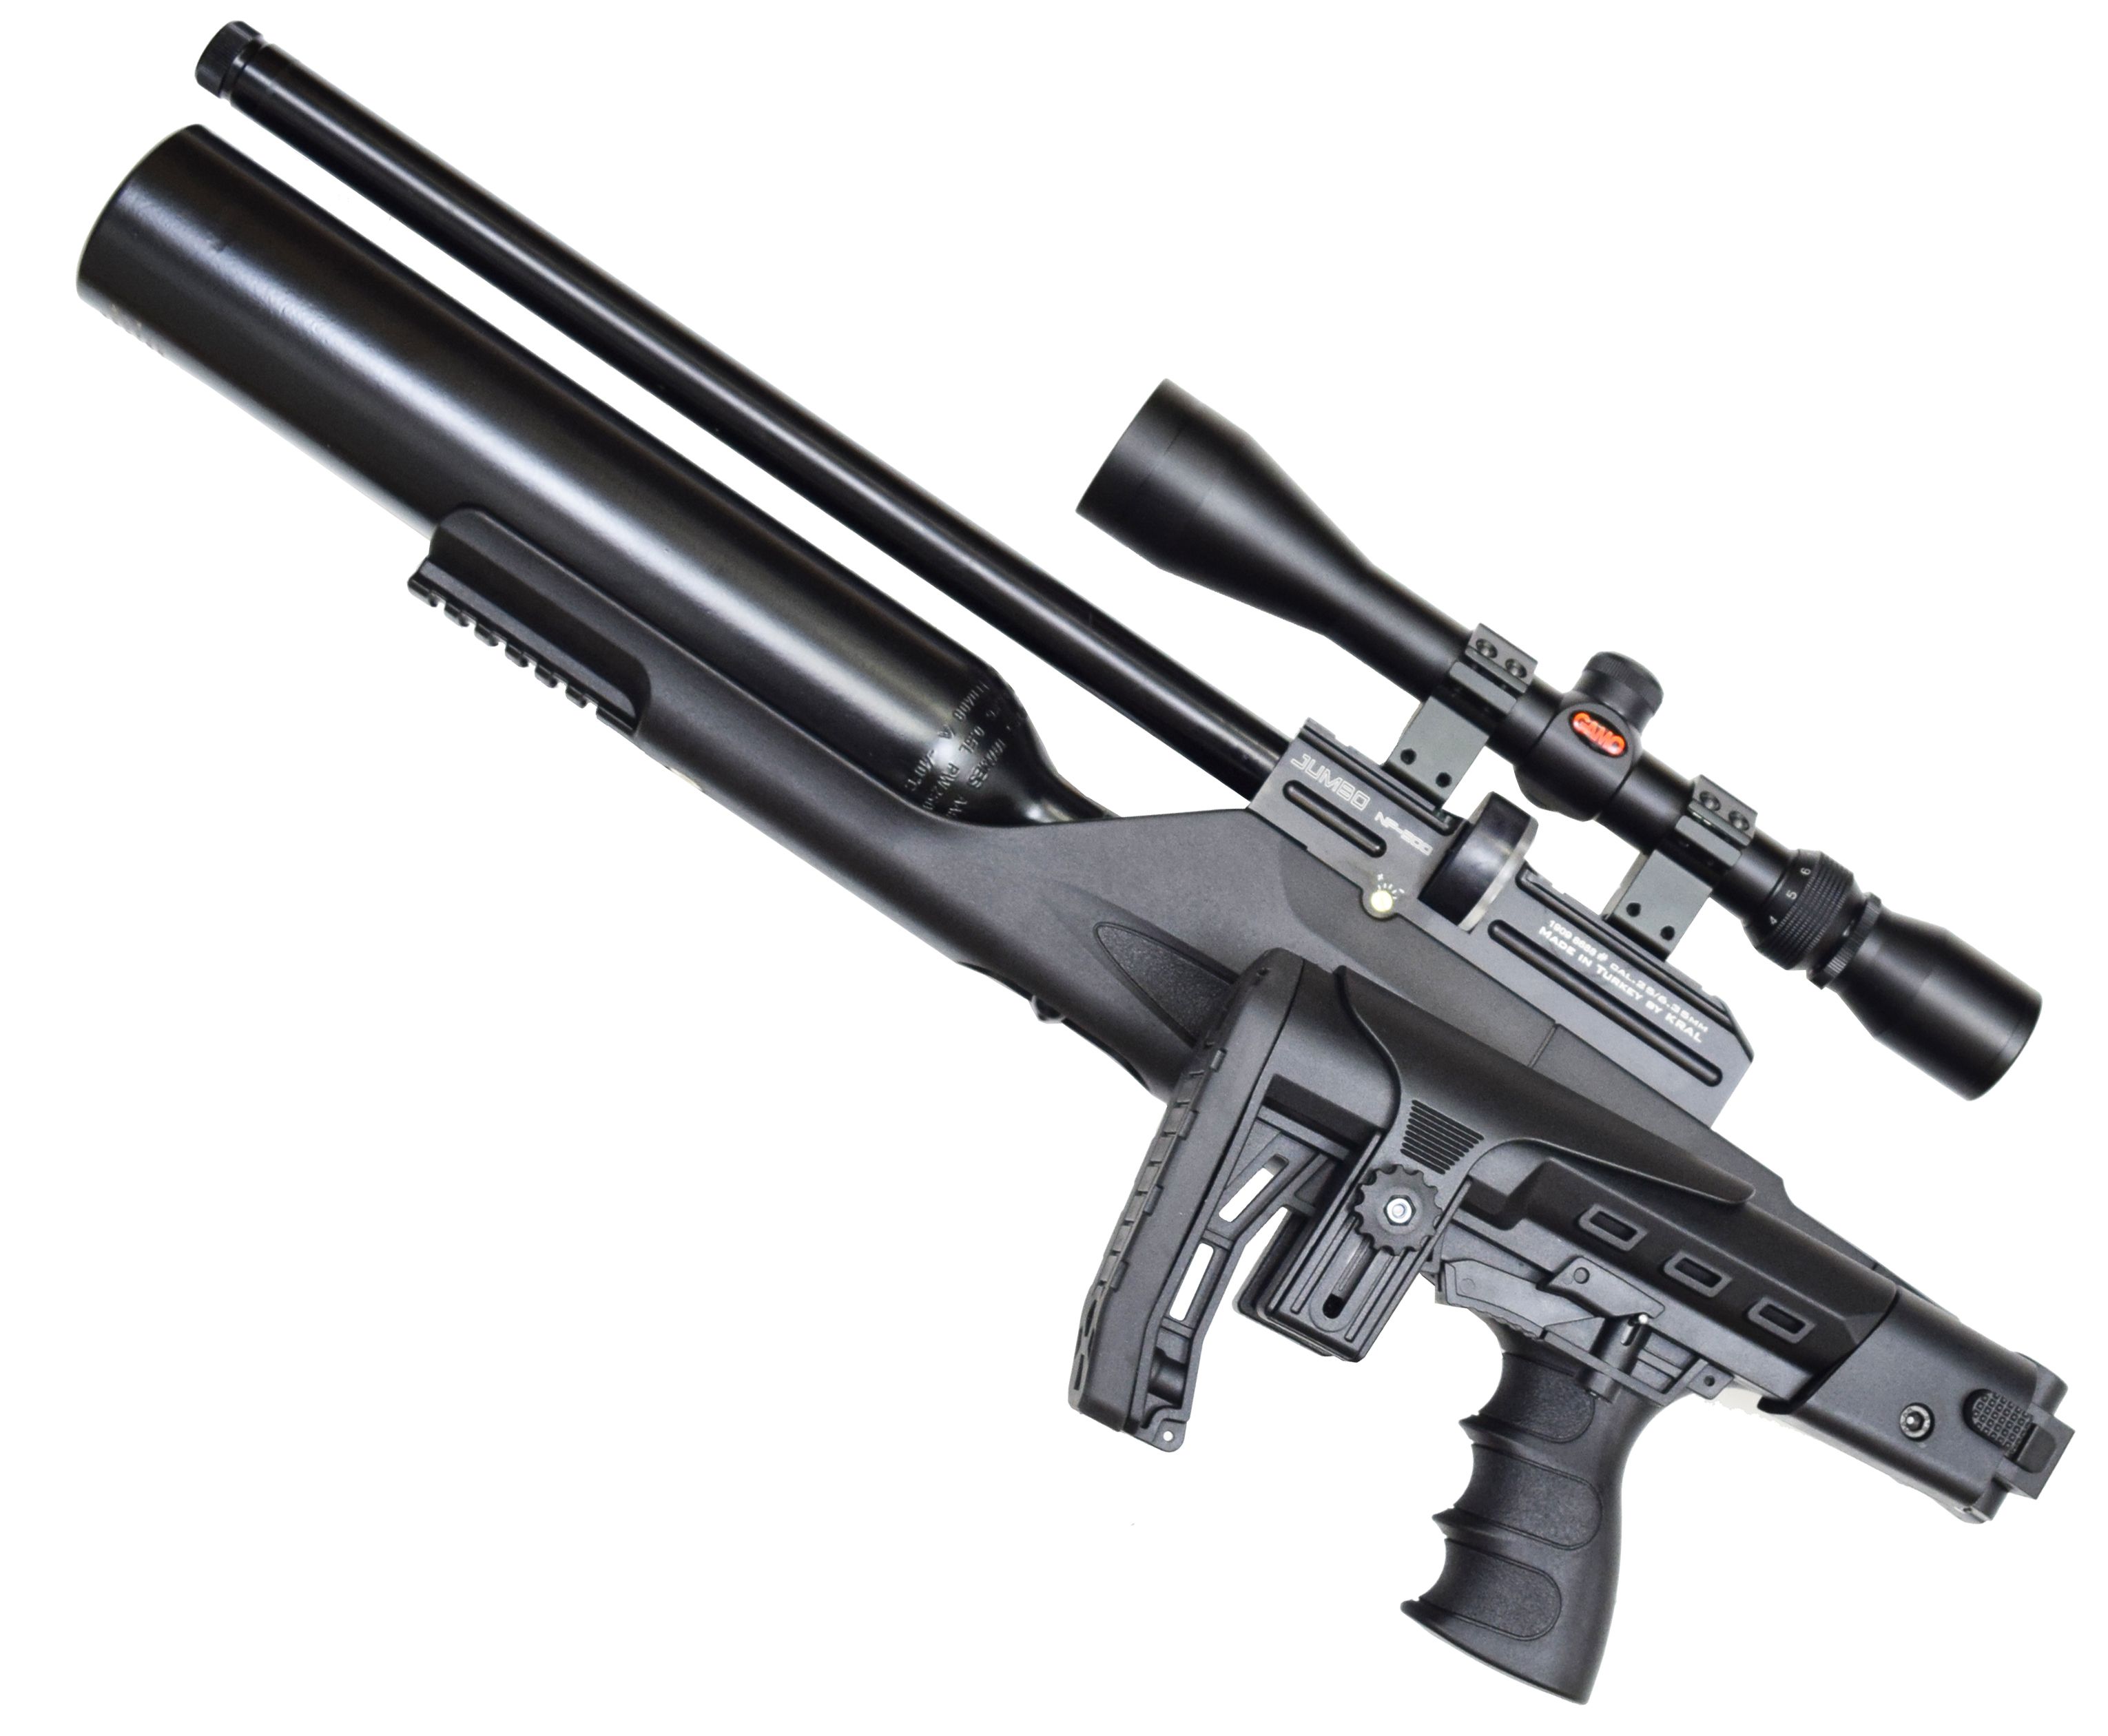 Цены крал. Kral Puncher Jumbo NP-500 6 35 мм. ПСП винтовка крал Панчер 6.35. PCP пневматика 6.35 Kral. ПСП винтовка Kral NP 500.